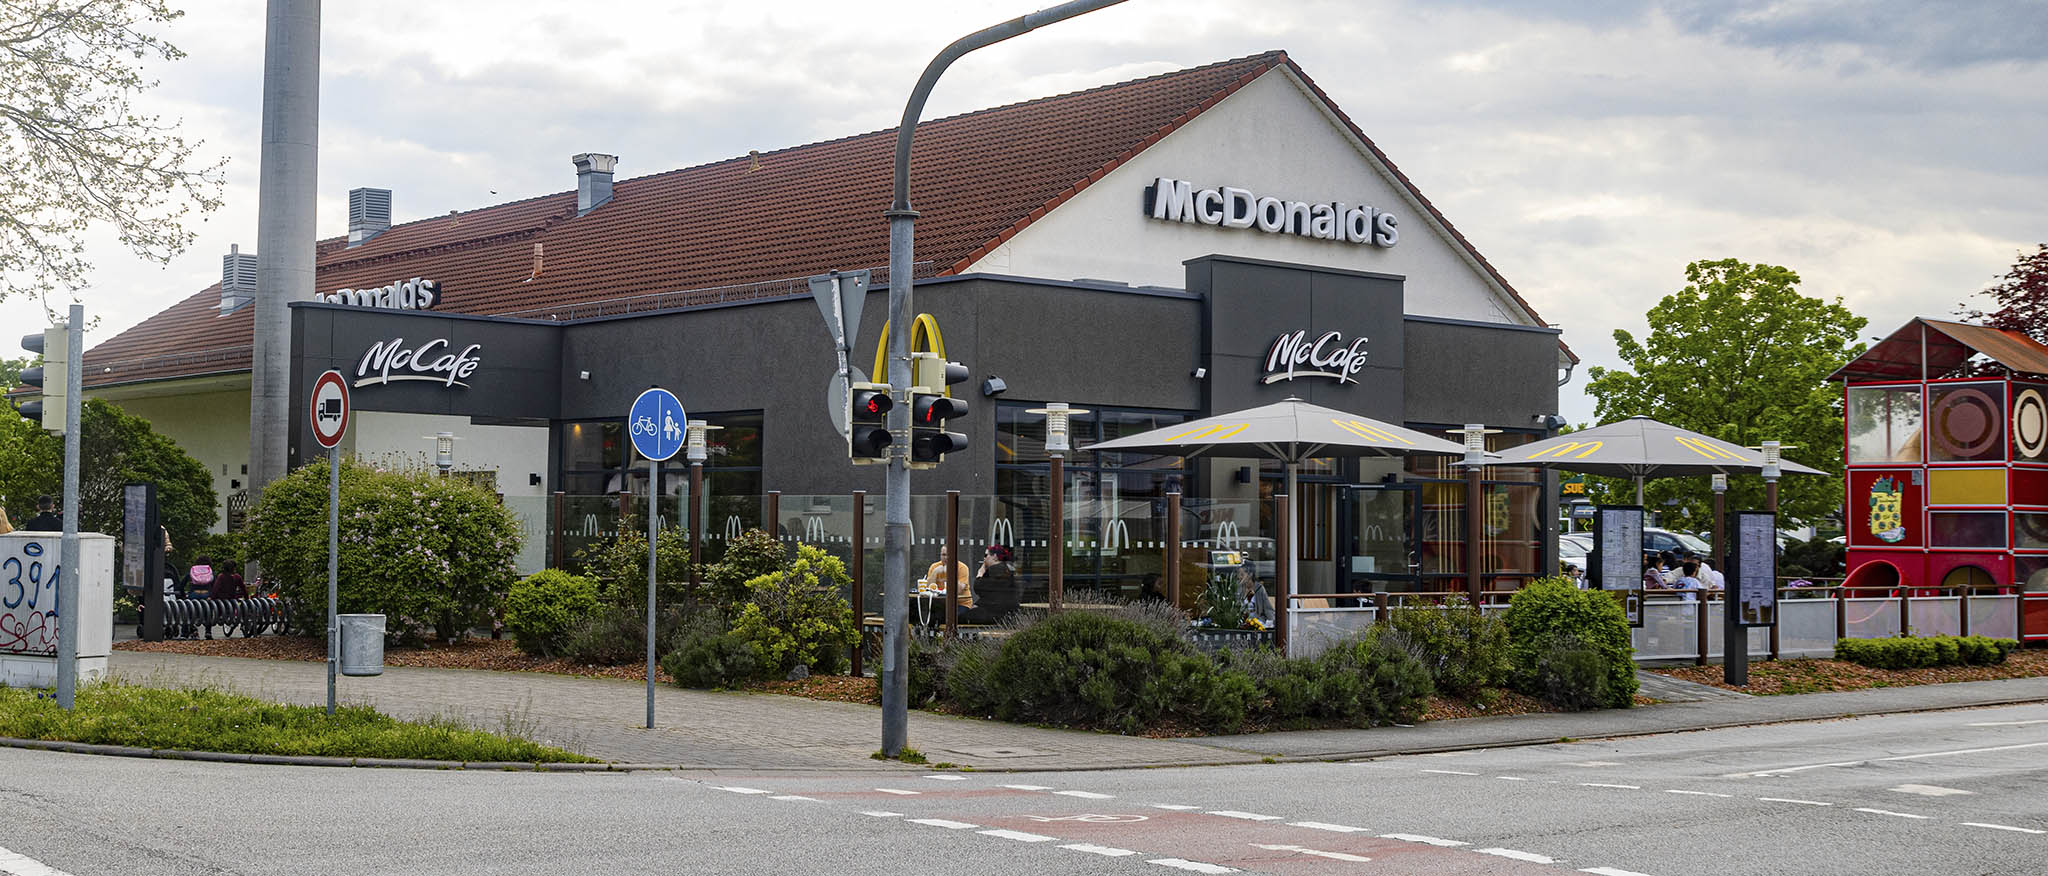 Das McDonald’s-Restaurant in Frankenthal